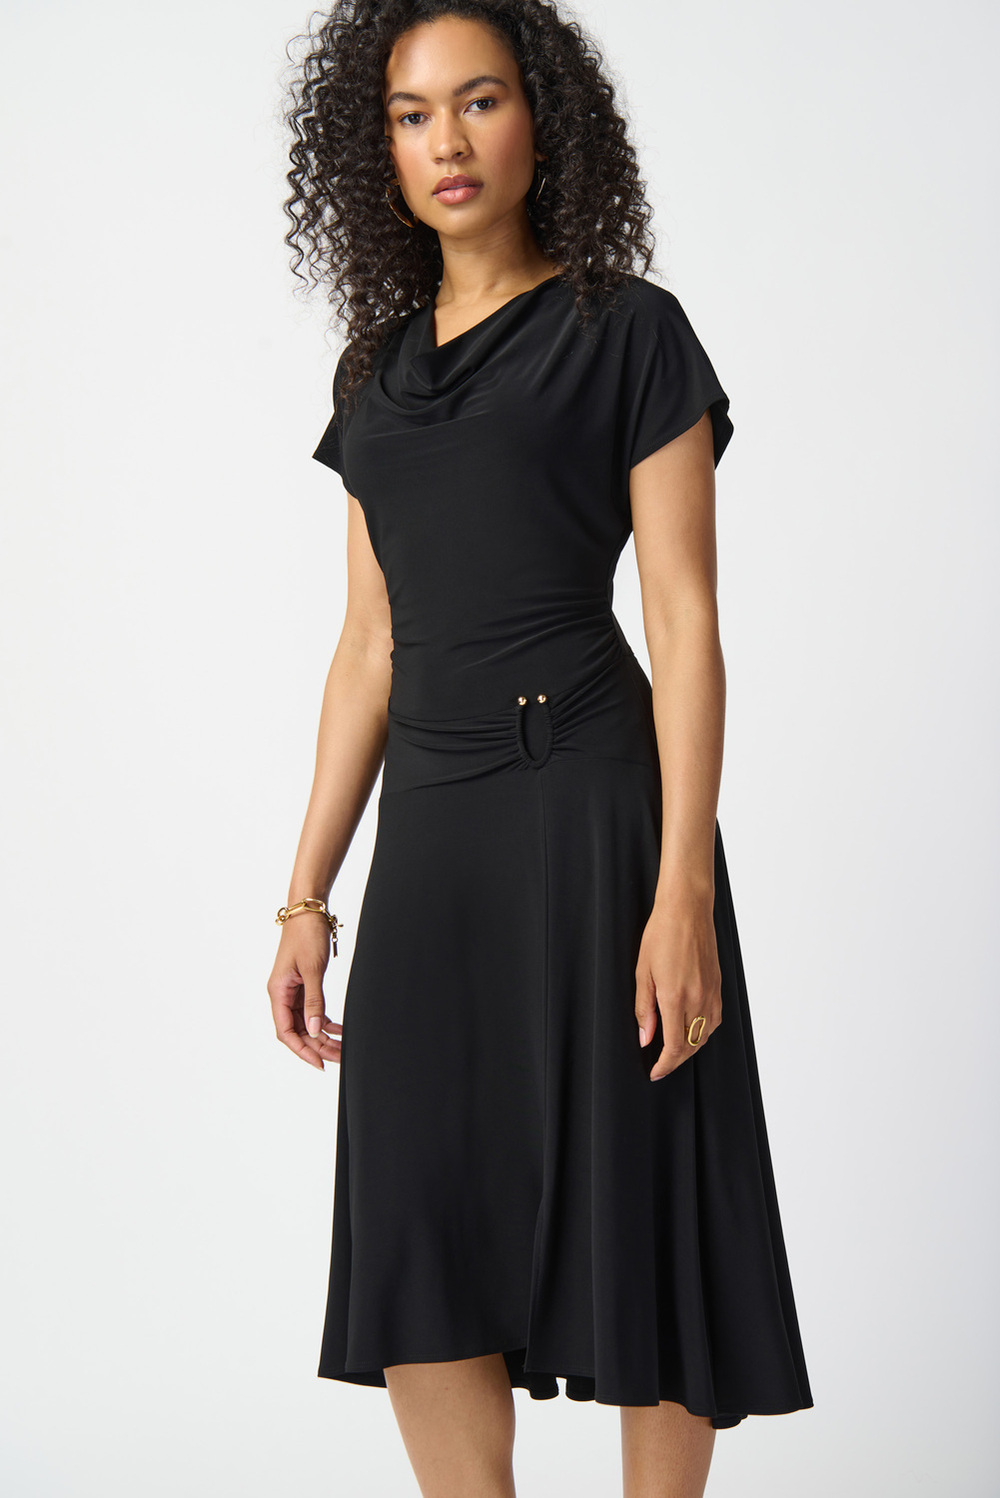 Pleated Short Sleeve Dress Style 241152. Black